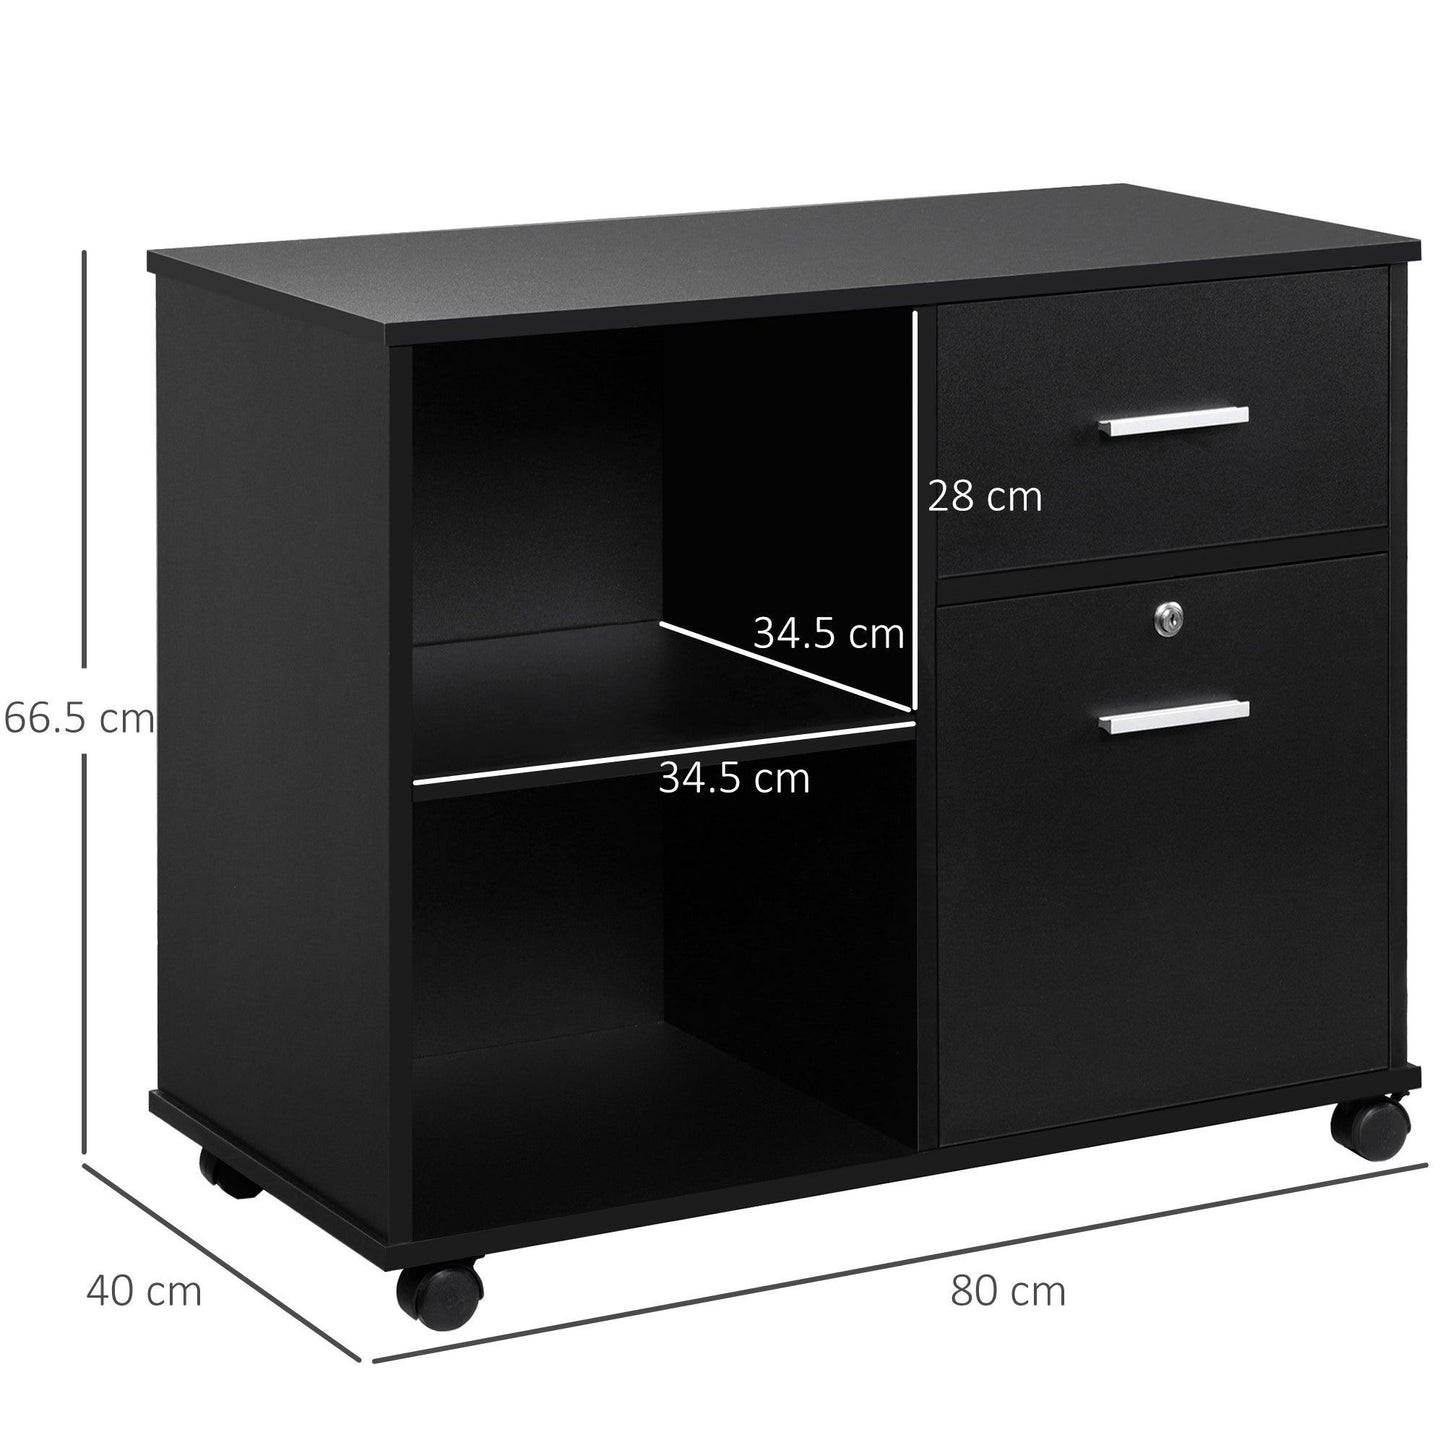 Vinsetto Mobile Filing Cabinet: Convenient A4 Size Storage - ALL4U RETAILER LTD